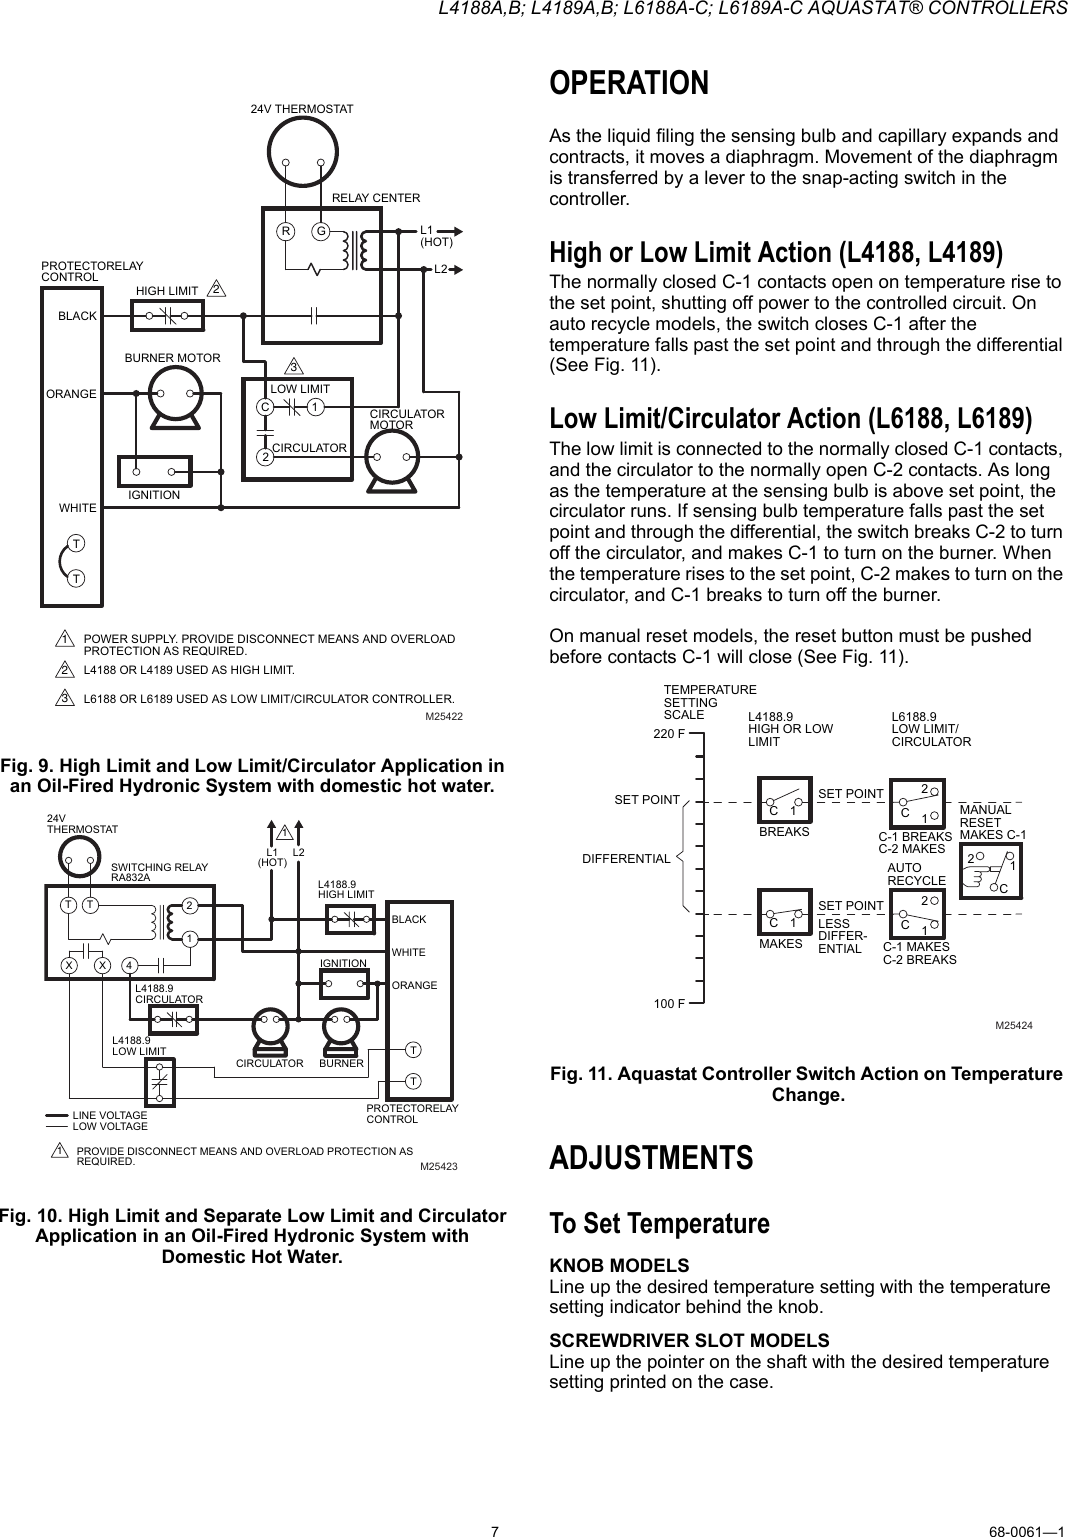 Page 7 of 8 - Honeywell Honeywell-Aquastat-L6188A-C-Users-Manual- 68-0061-1 - L4188A,B; L4189A,B; L6188A-C; L6189A-C Aquastat® Controllers  Honeywell-aquastat-l6188a-c-users-manual